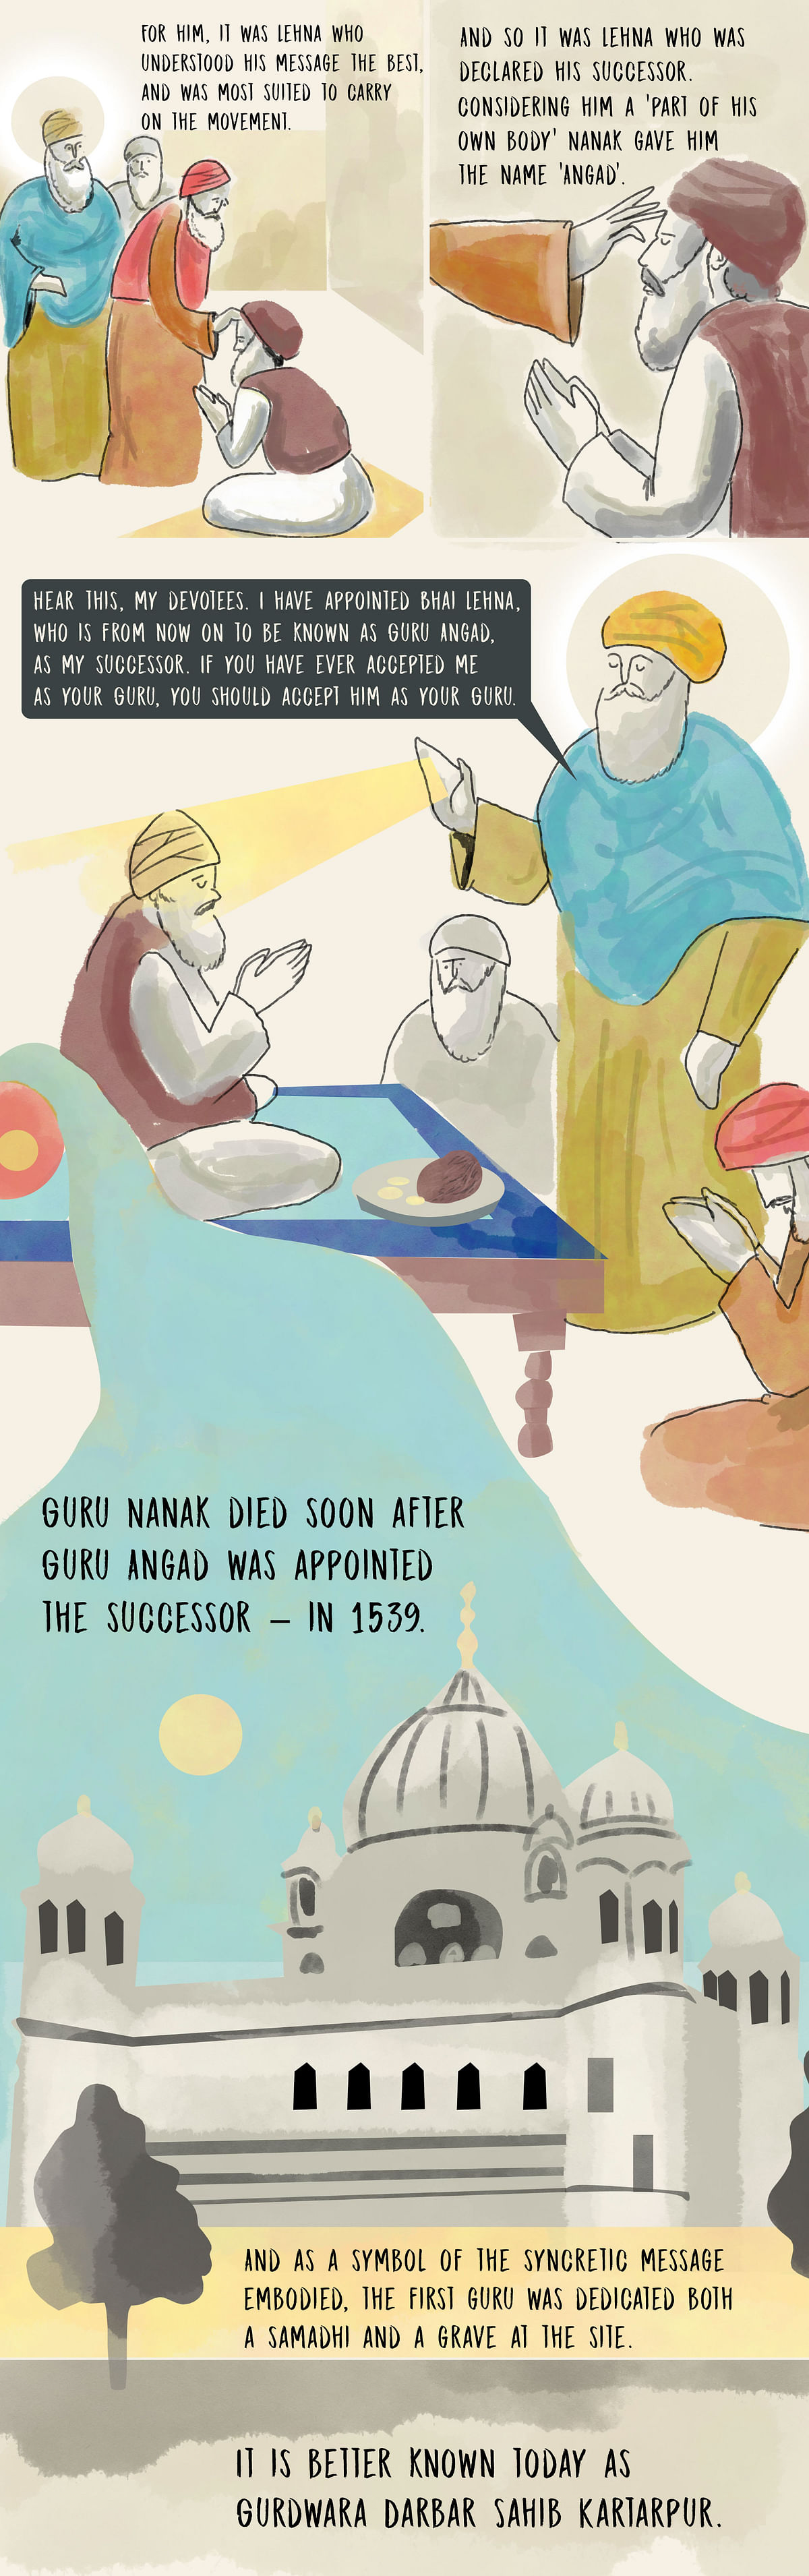 It was in Kartarpur that Guru Nanak met Bhai Lehna who went on to become his successor eventually.